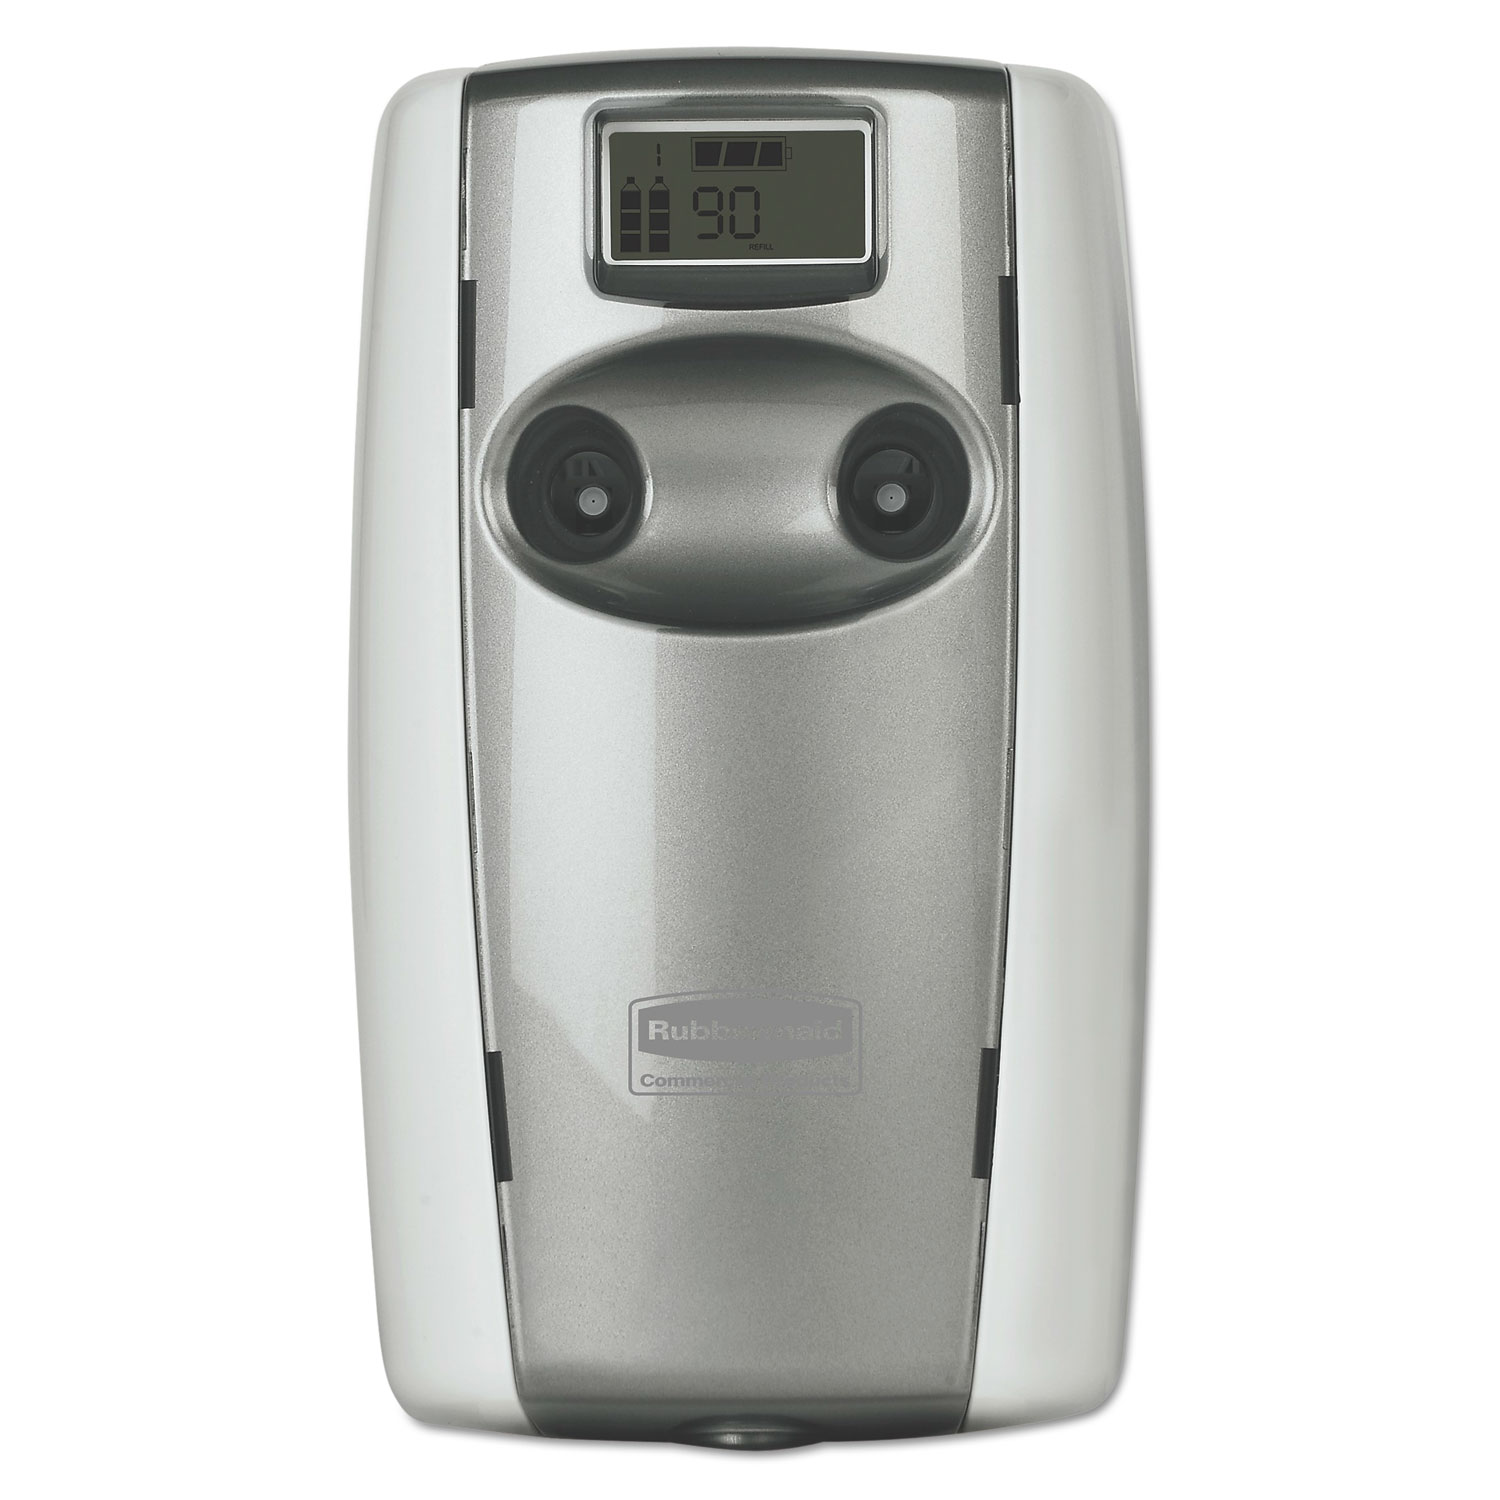  Rubbermaid Commercial FG4870001 TC Microburst Duet Dispenser, 5 x 3.5 x 8.6, Gray Pearl/White (RCP4870001) 